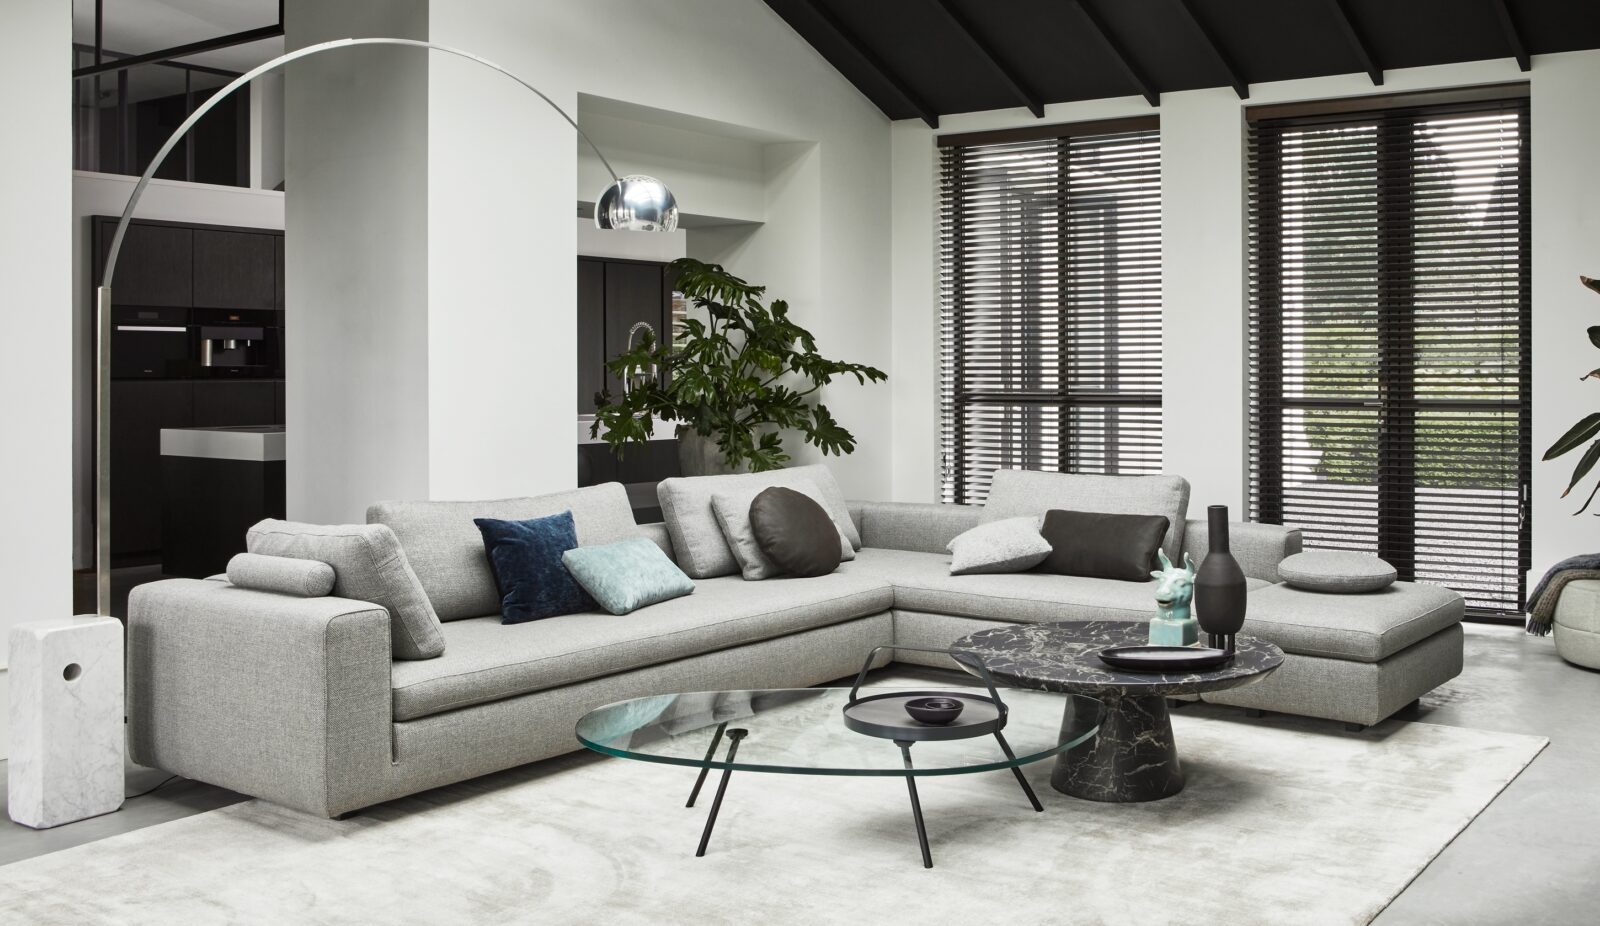 Villaz sofa Design on Stock - Villaz 1